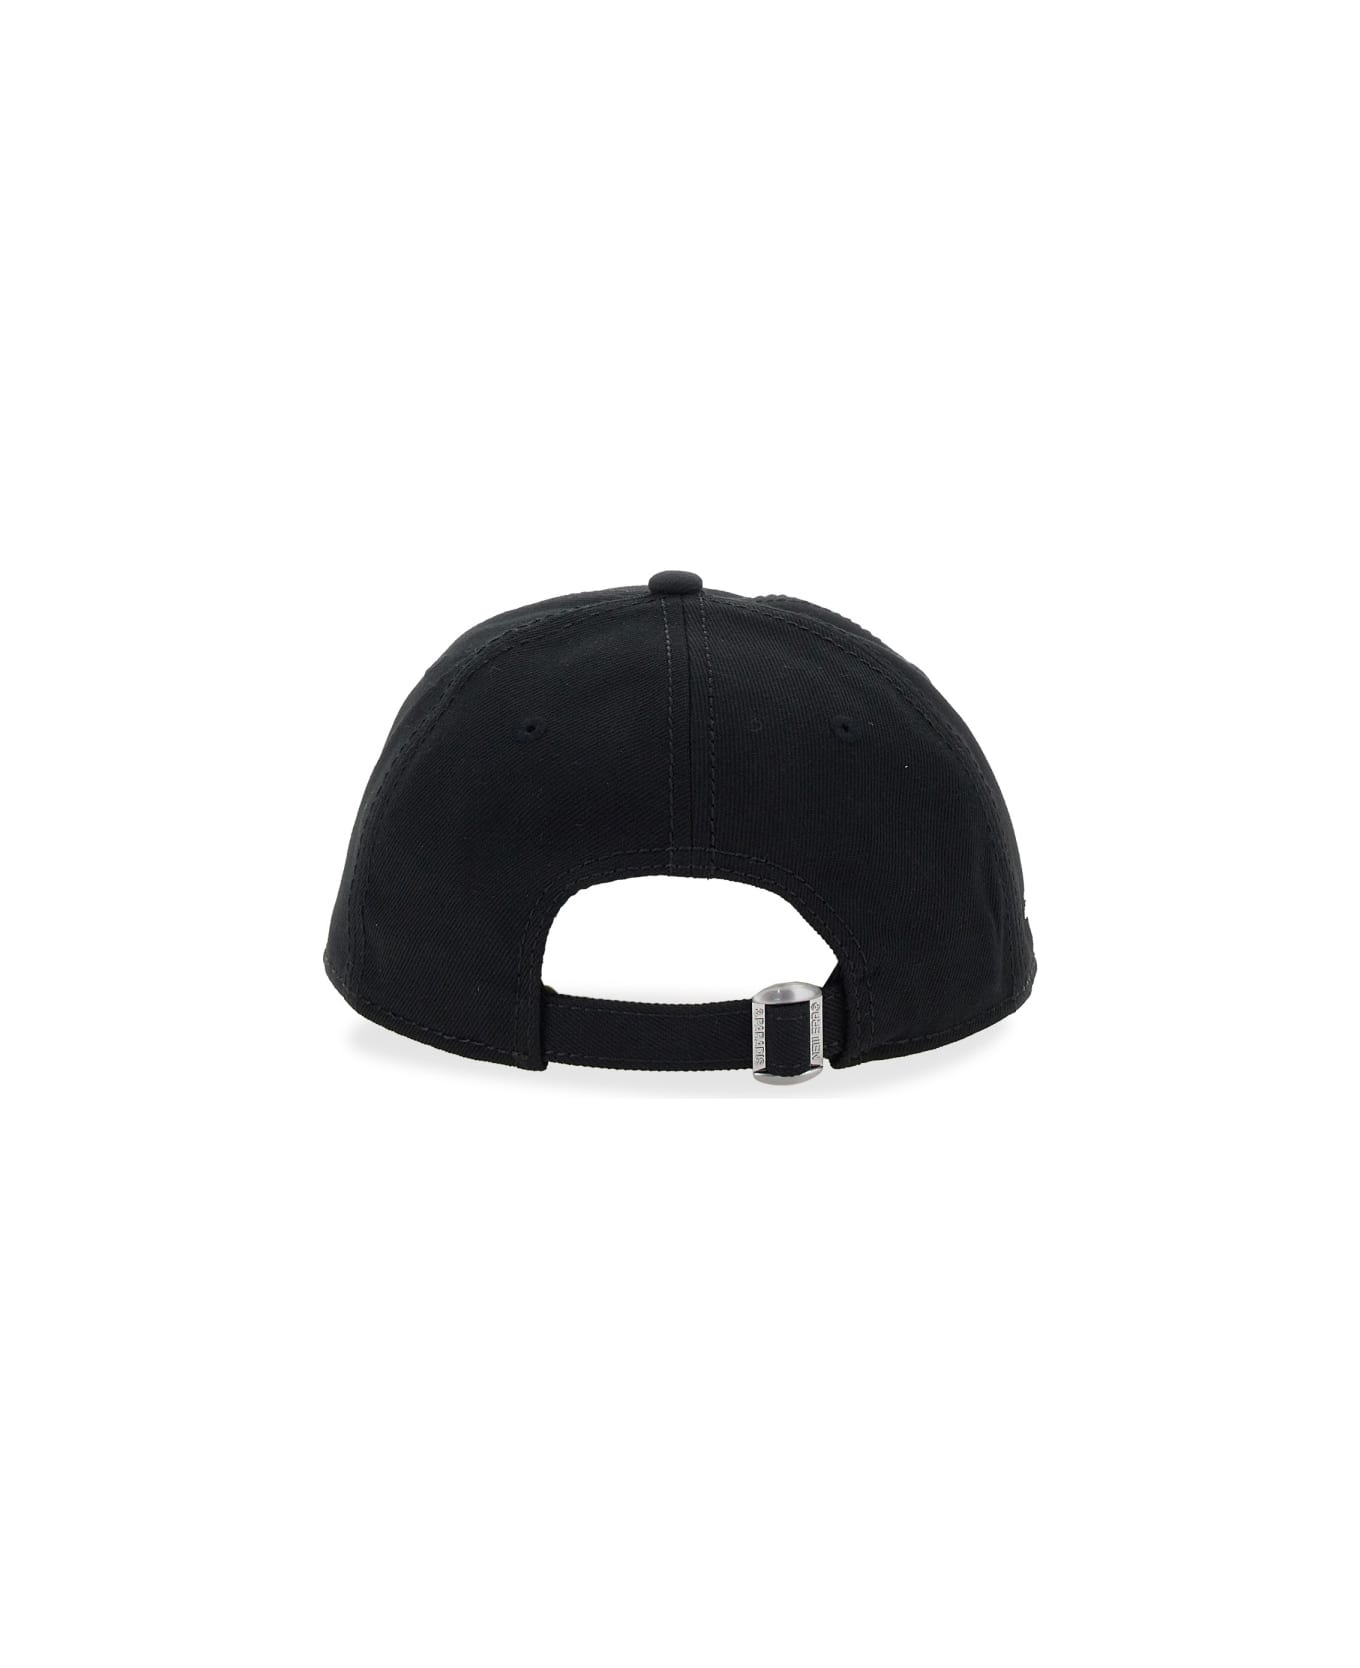 3.Paradis 9twenty Hat - BLACK 帽子